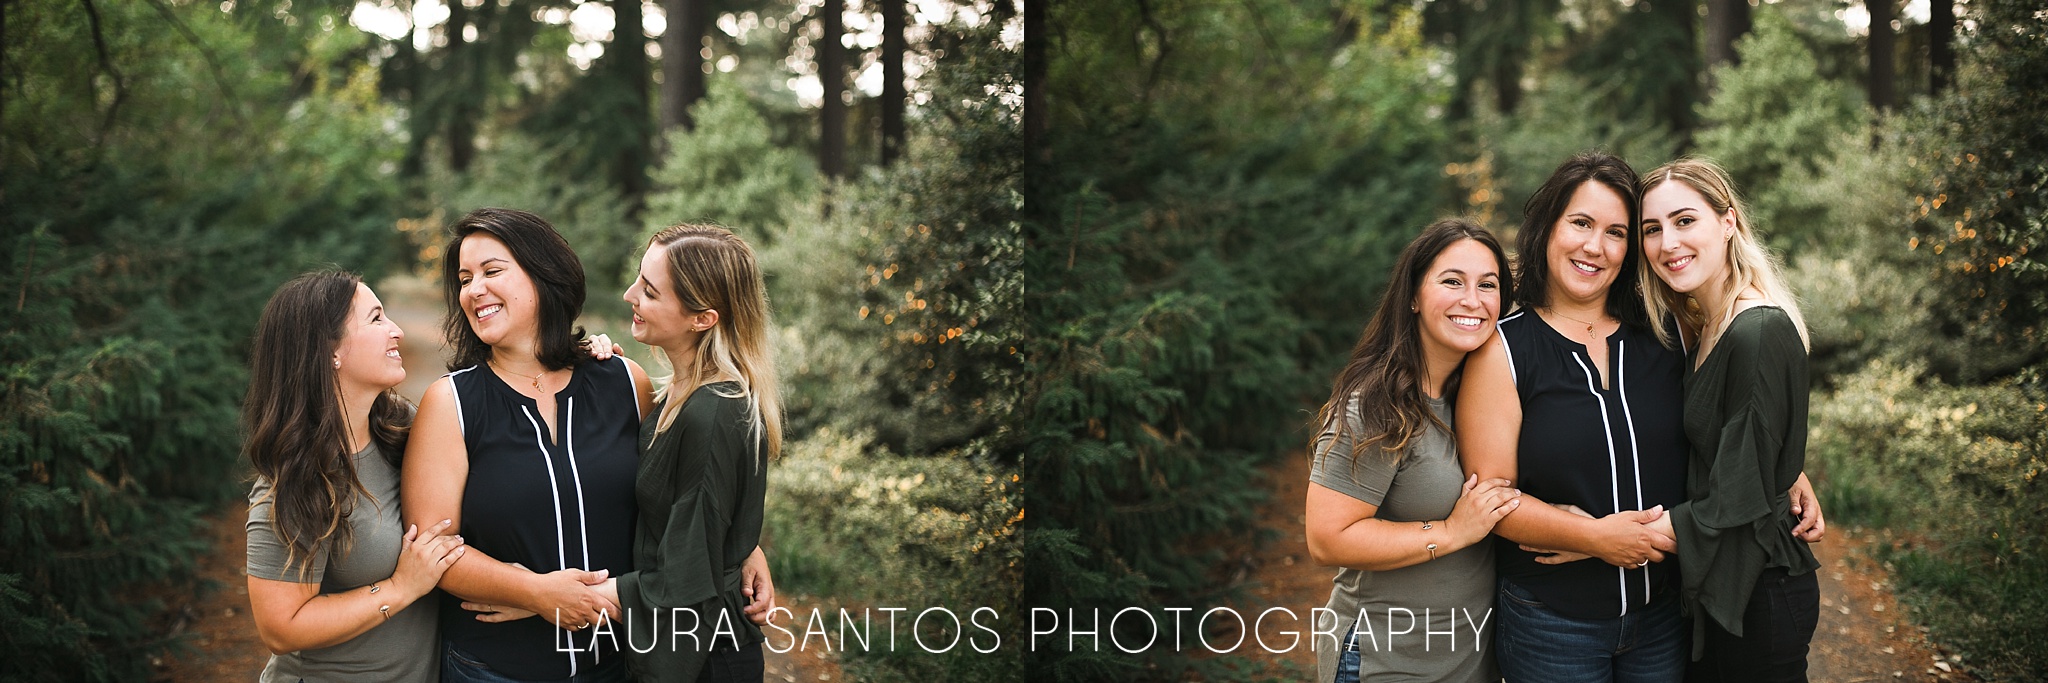 Laura Santos Photography Portland Oregon Family Photographer_0148.jpg